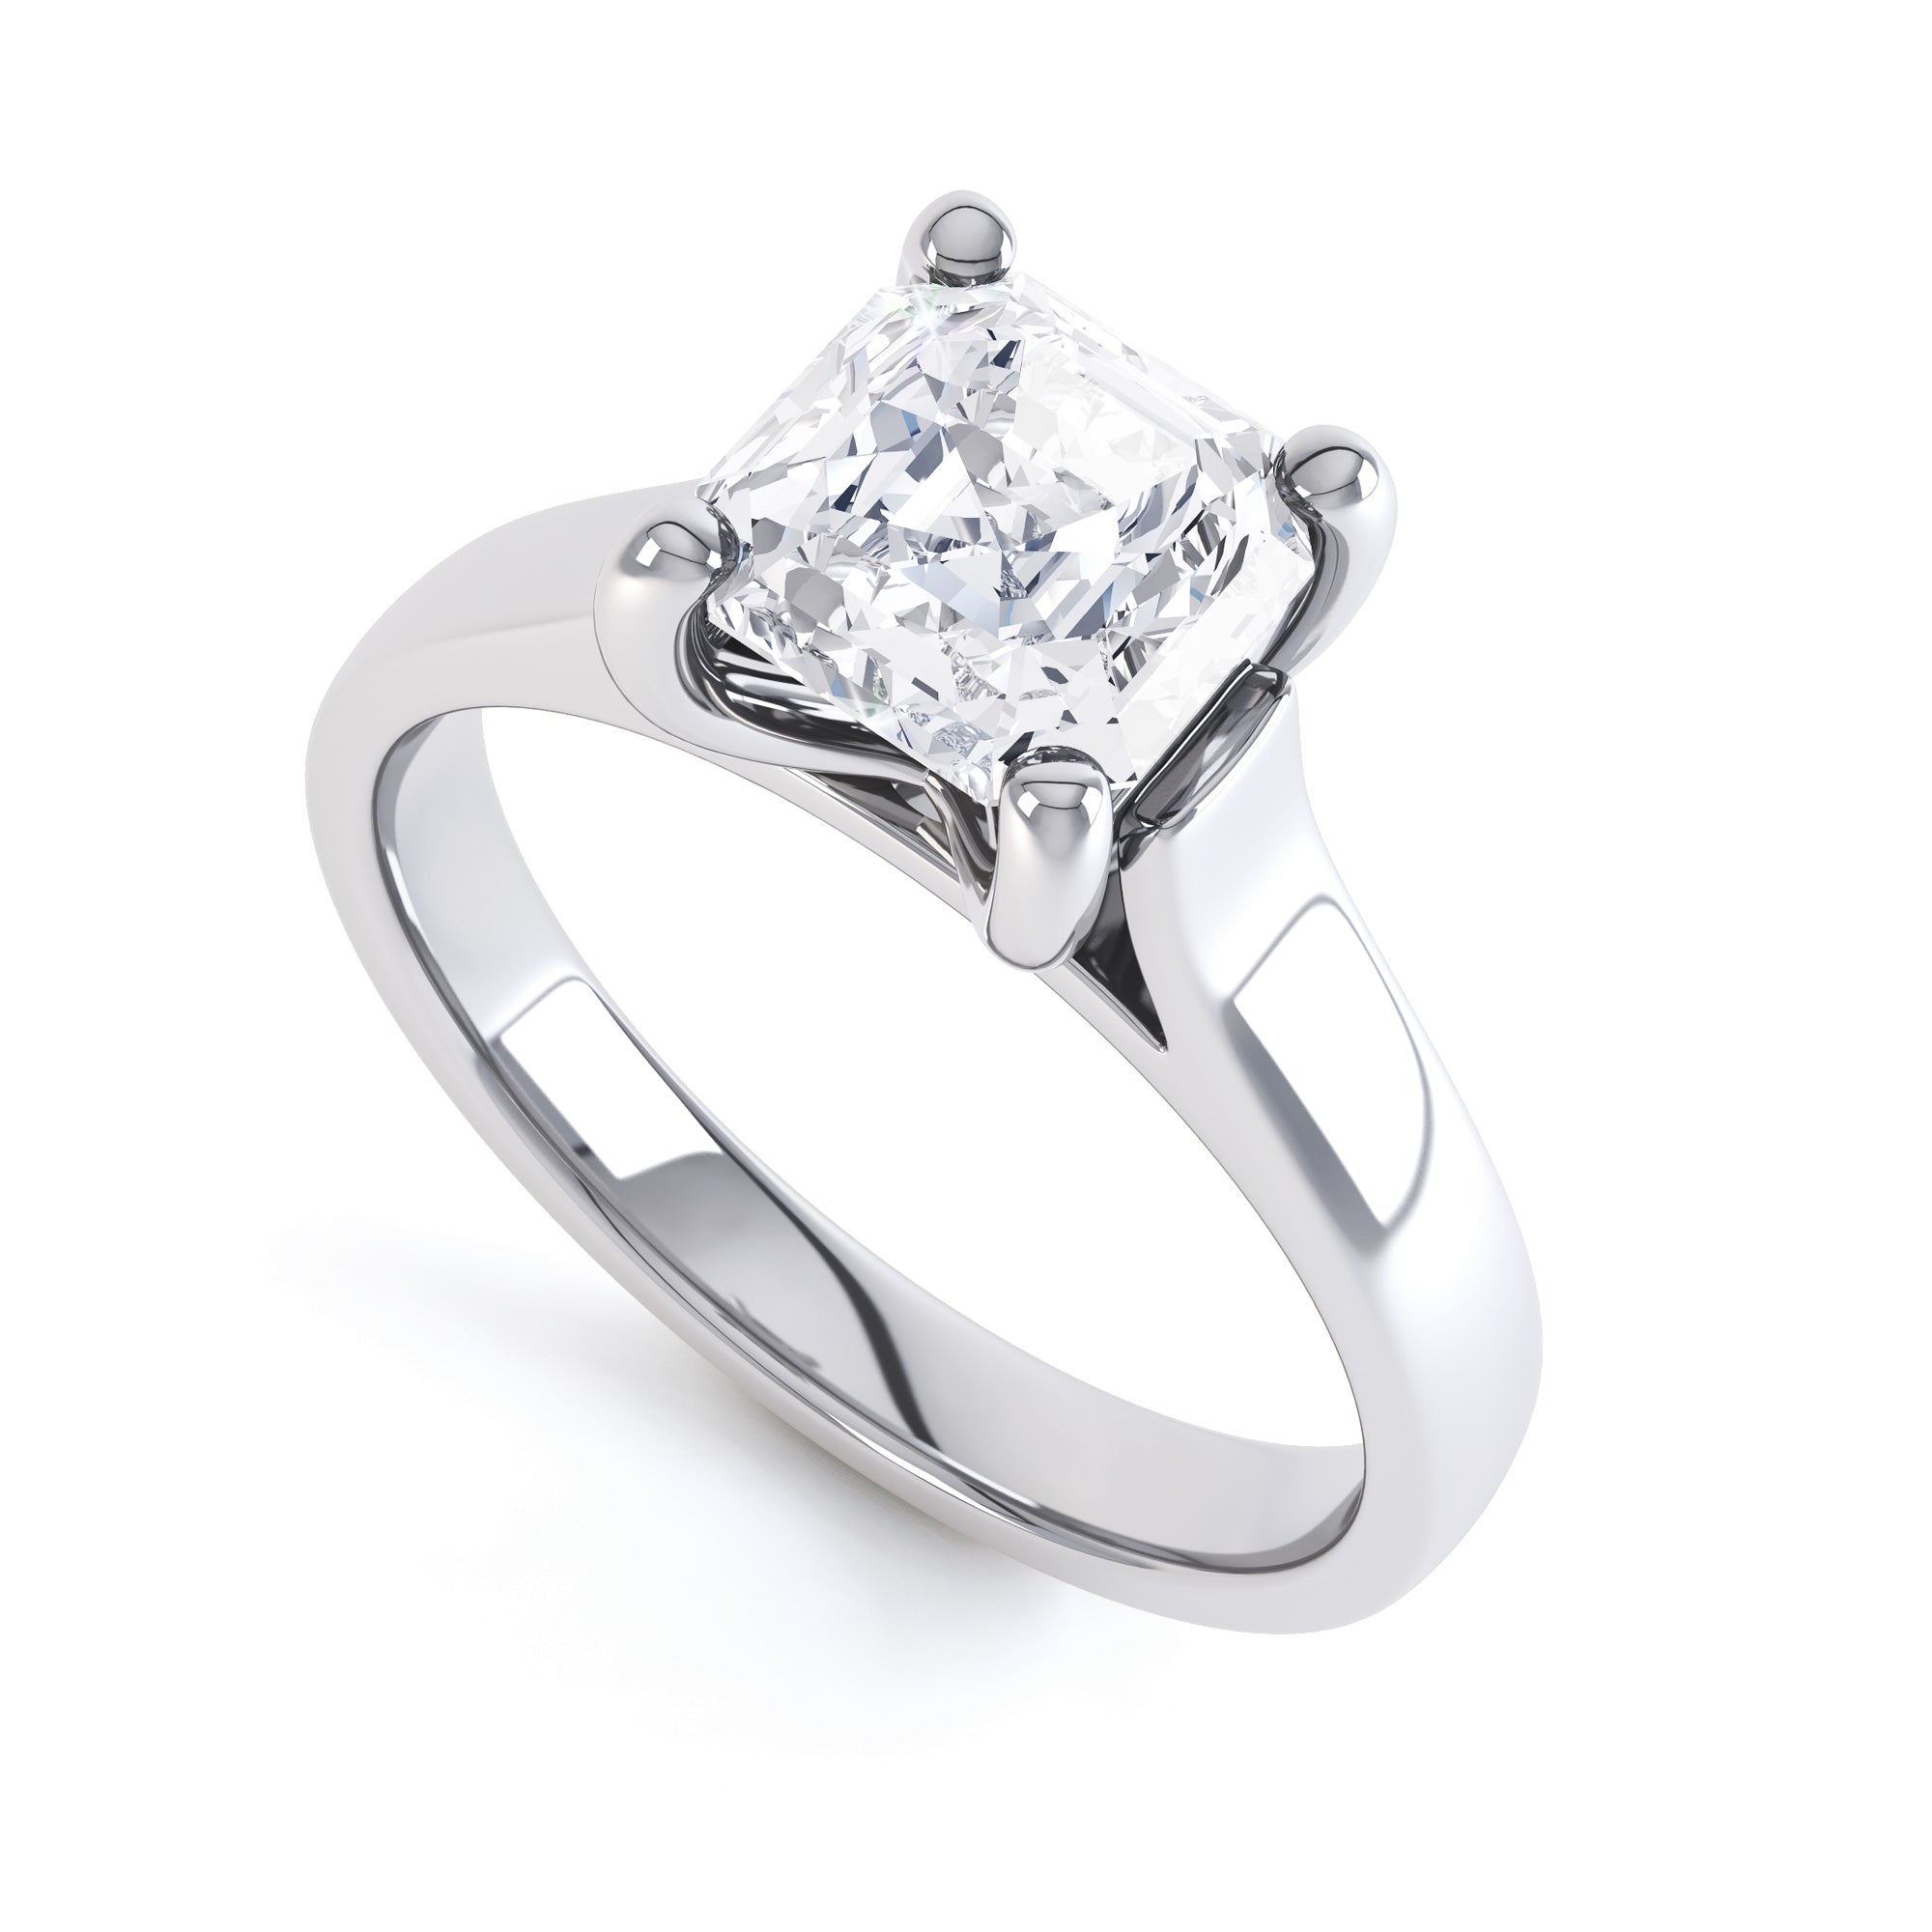 Asscher Cut Centre Stone, 4 claw, Diamond Engagement Ring with Parrallel Shoulders